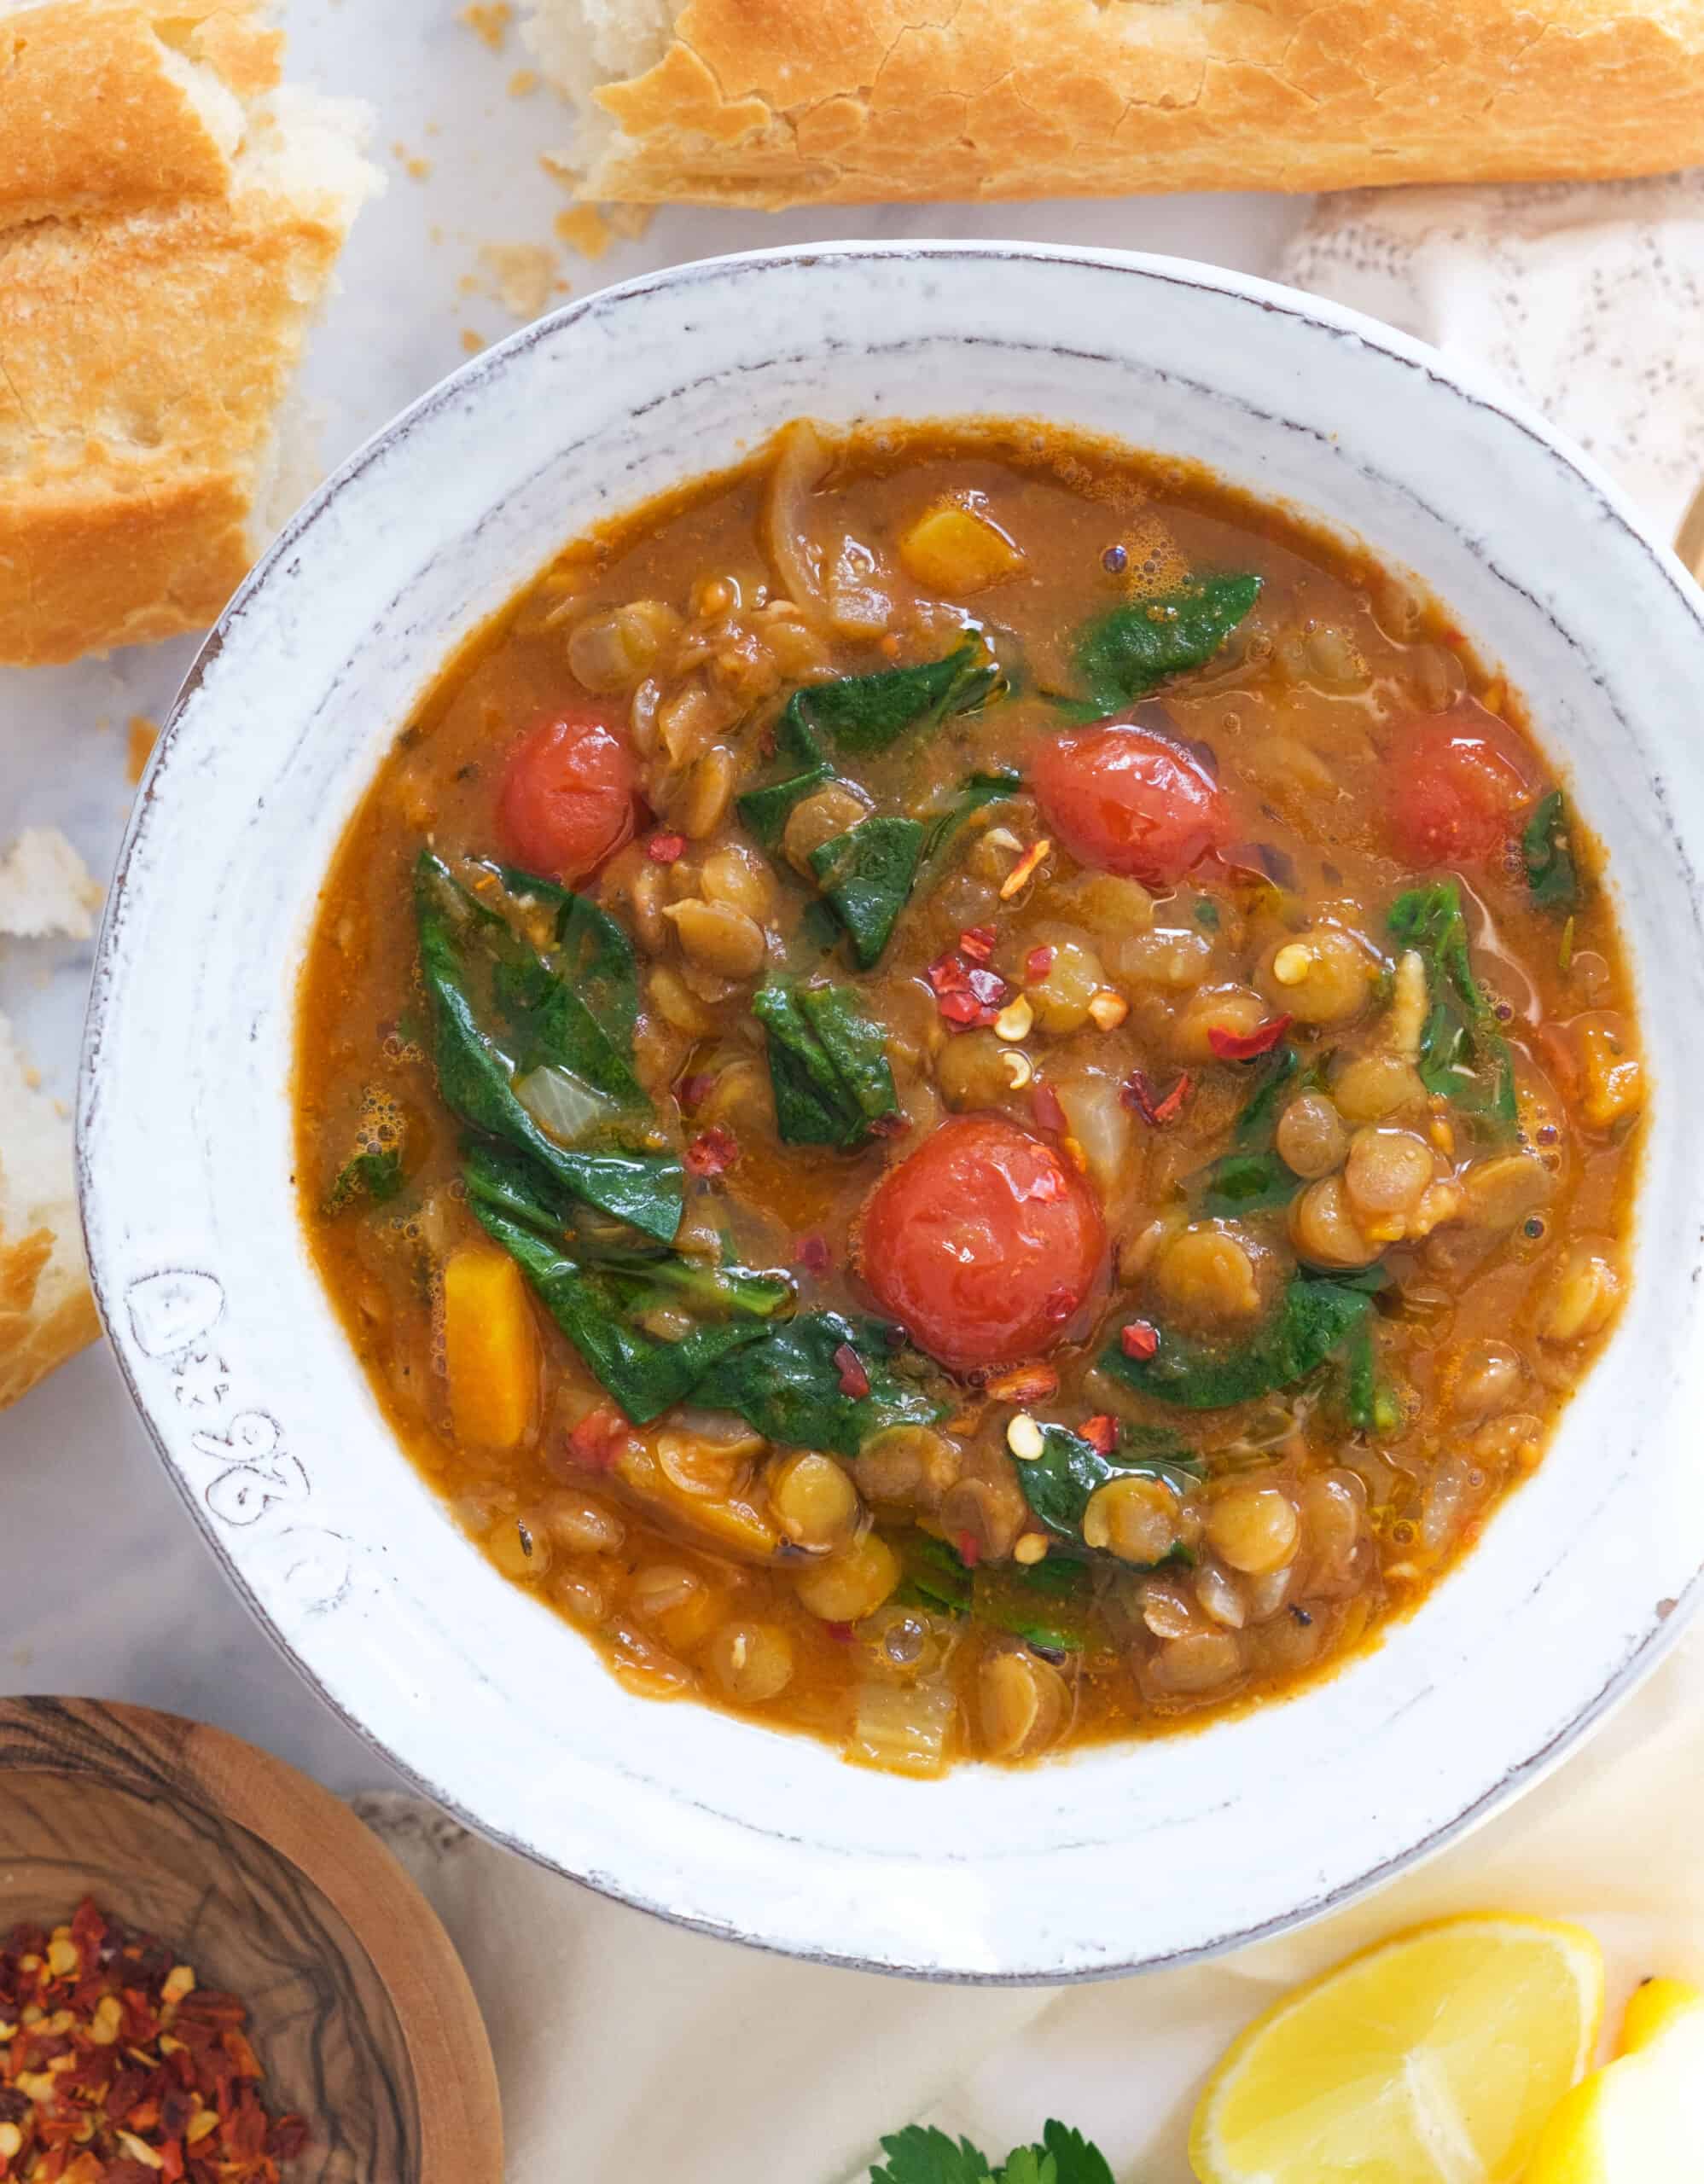 https://theclevermeal.com/wp-content/uploads/2022/10/vegan-lentil-soup_1-scaled.jpg